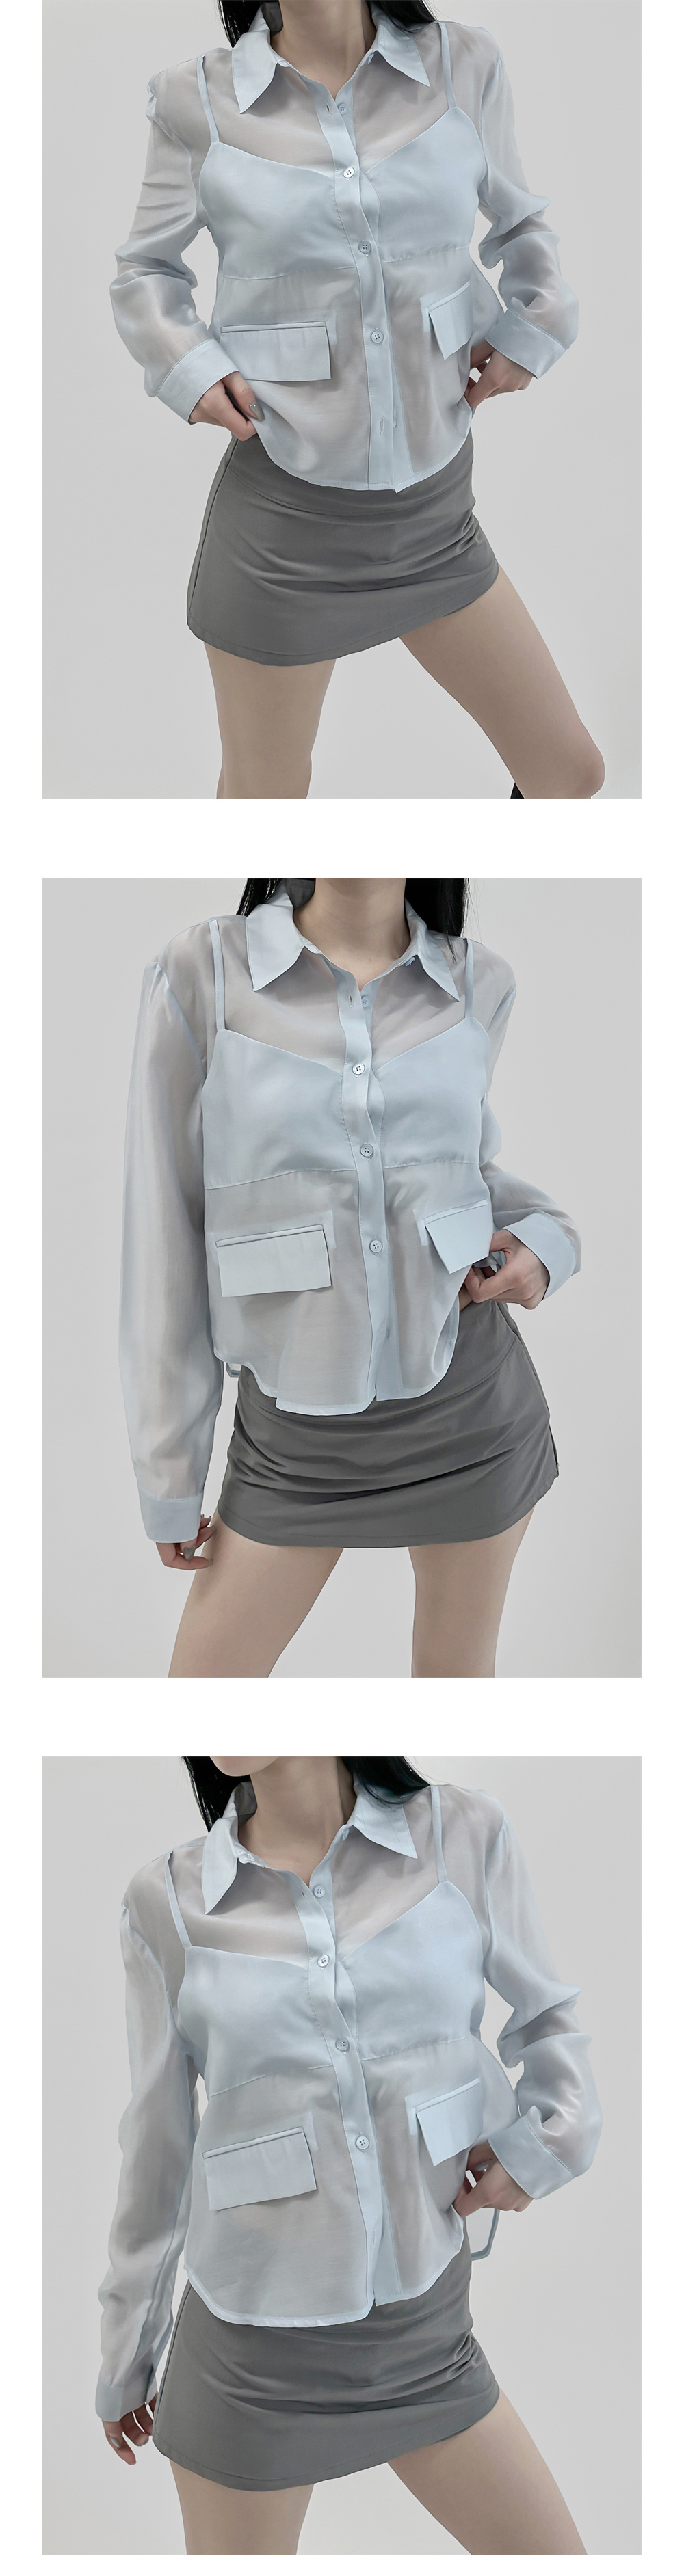 dress model image-S1L10